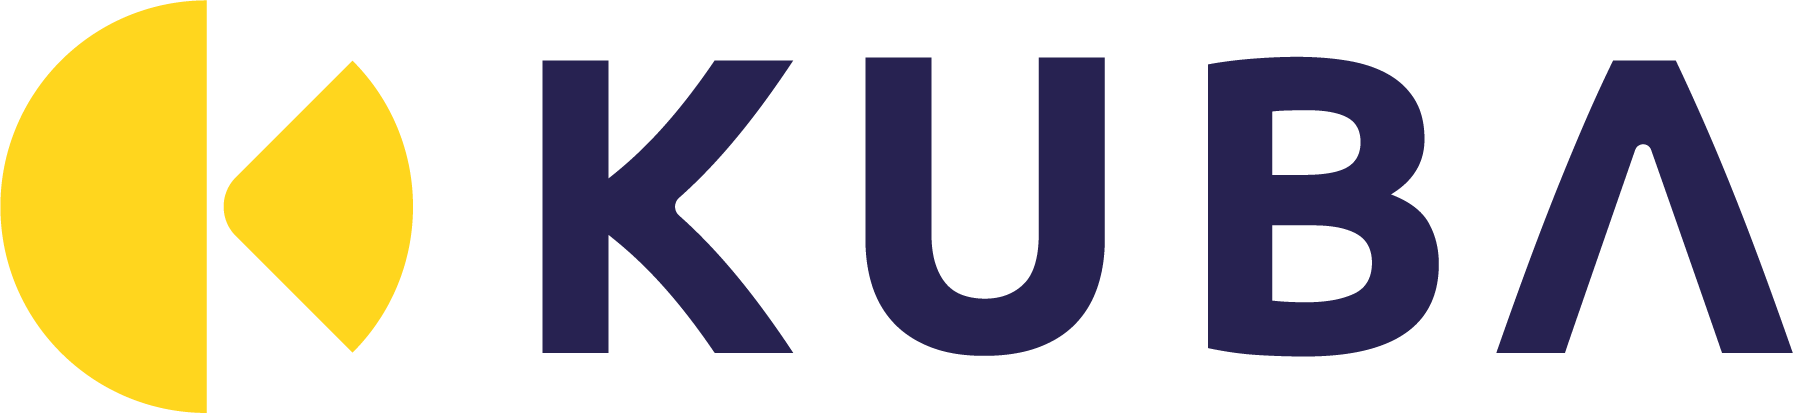 KUBA master logo